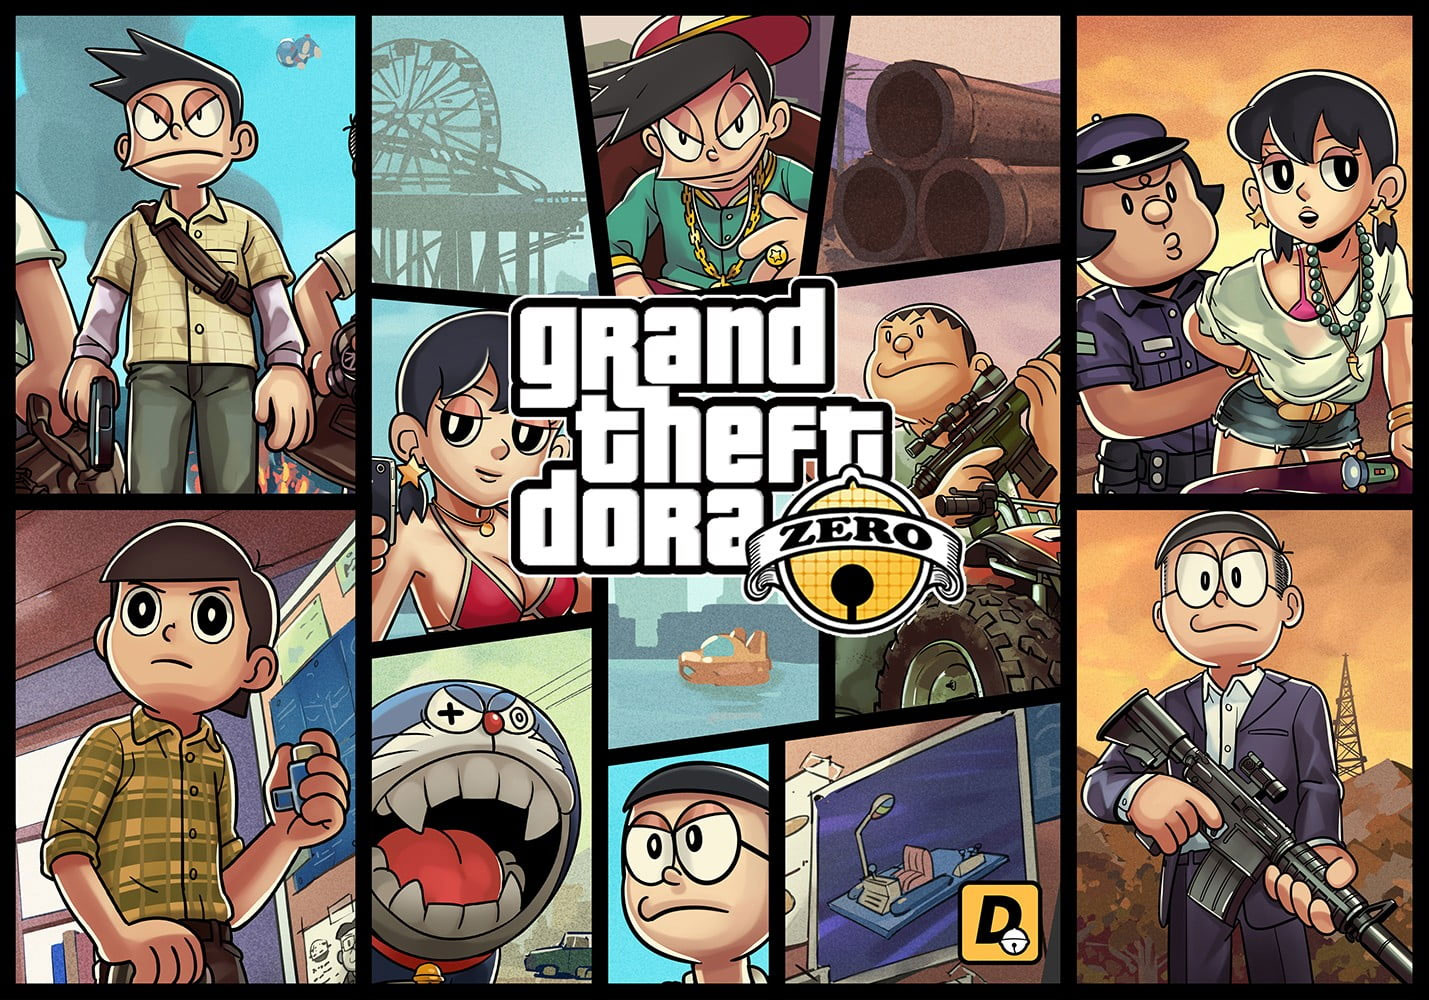 Wallpaper Grand Theft Dora Zero Wallpaper, Grand Theft Auto